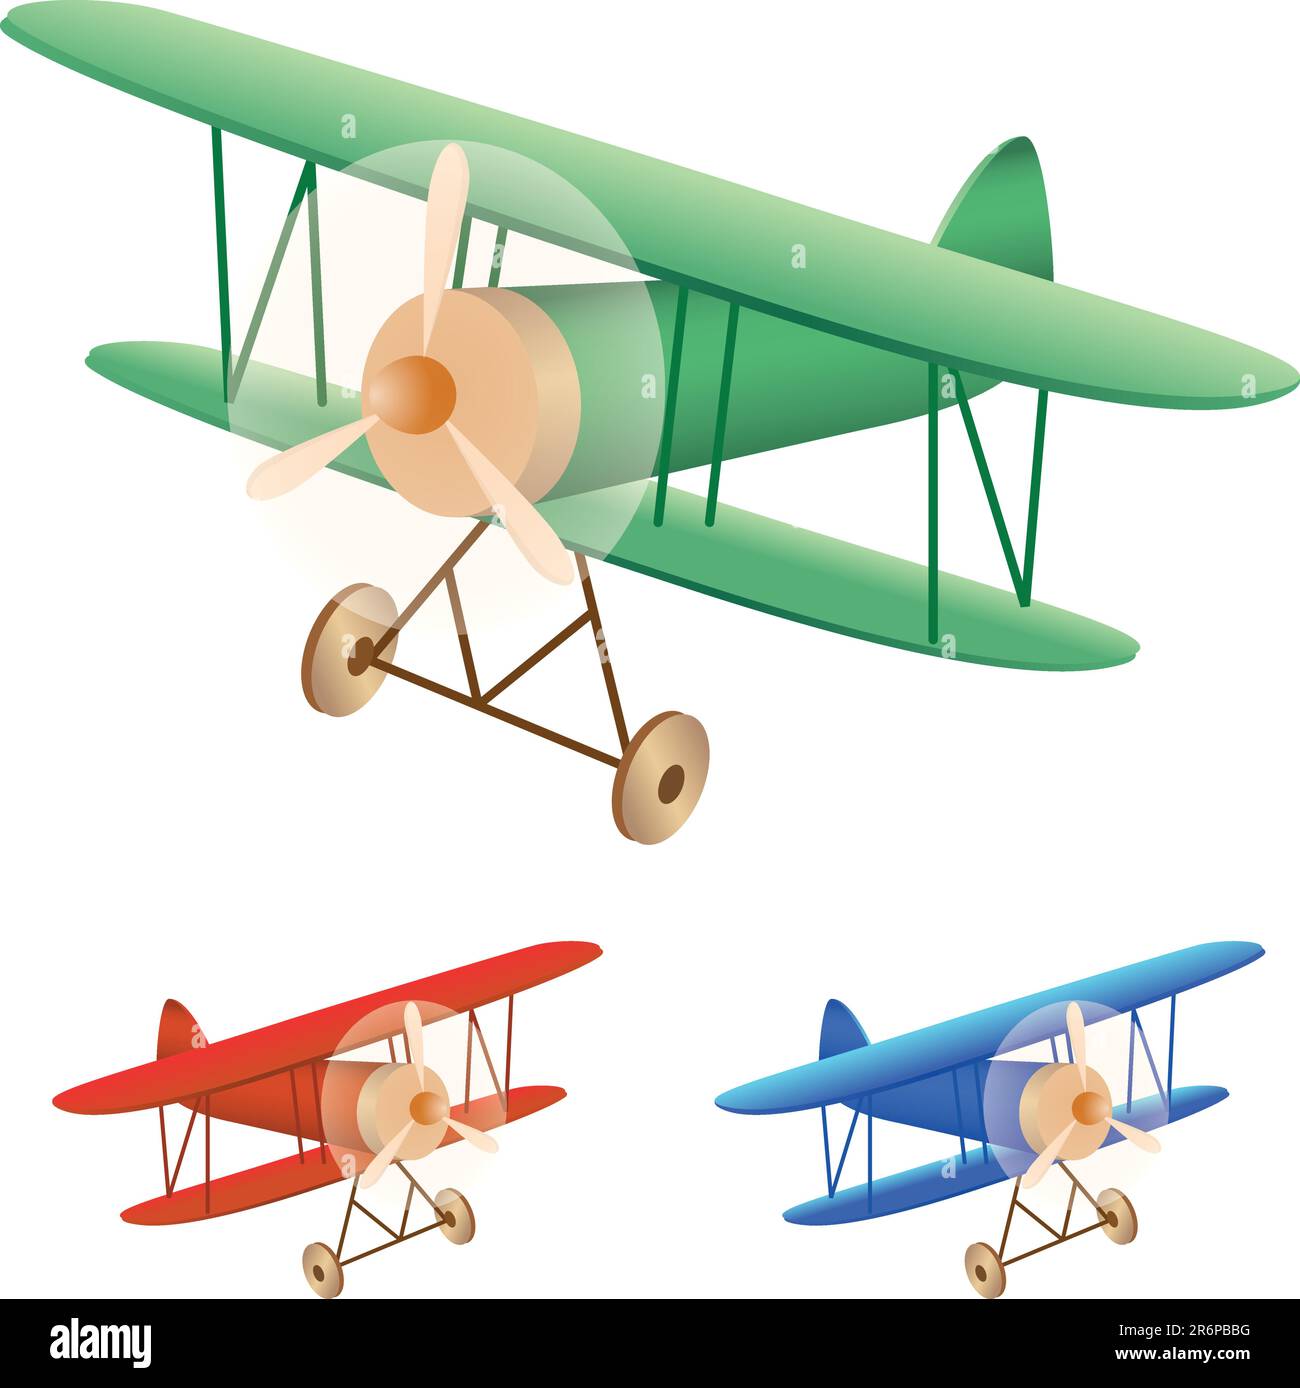 Vector illustration set of old biplane Stock Vector